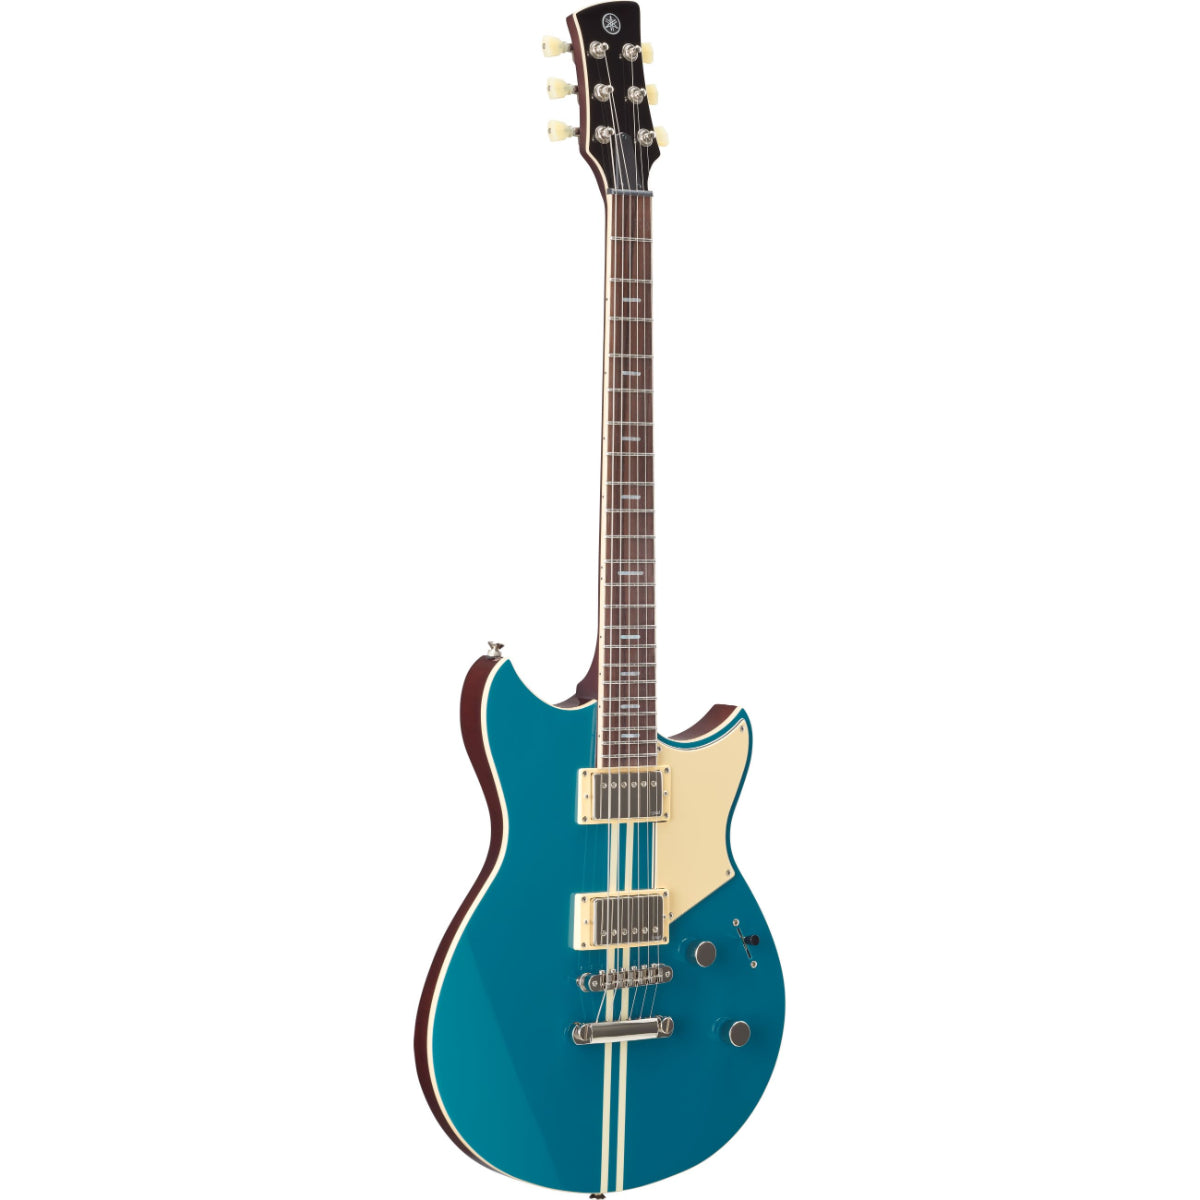 RSS20SWB Revstar Standard Electric Guitar, Swift Blue